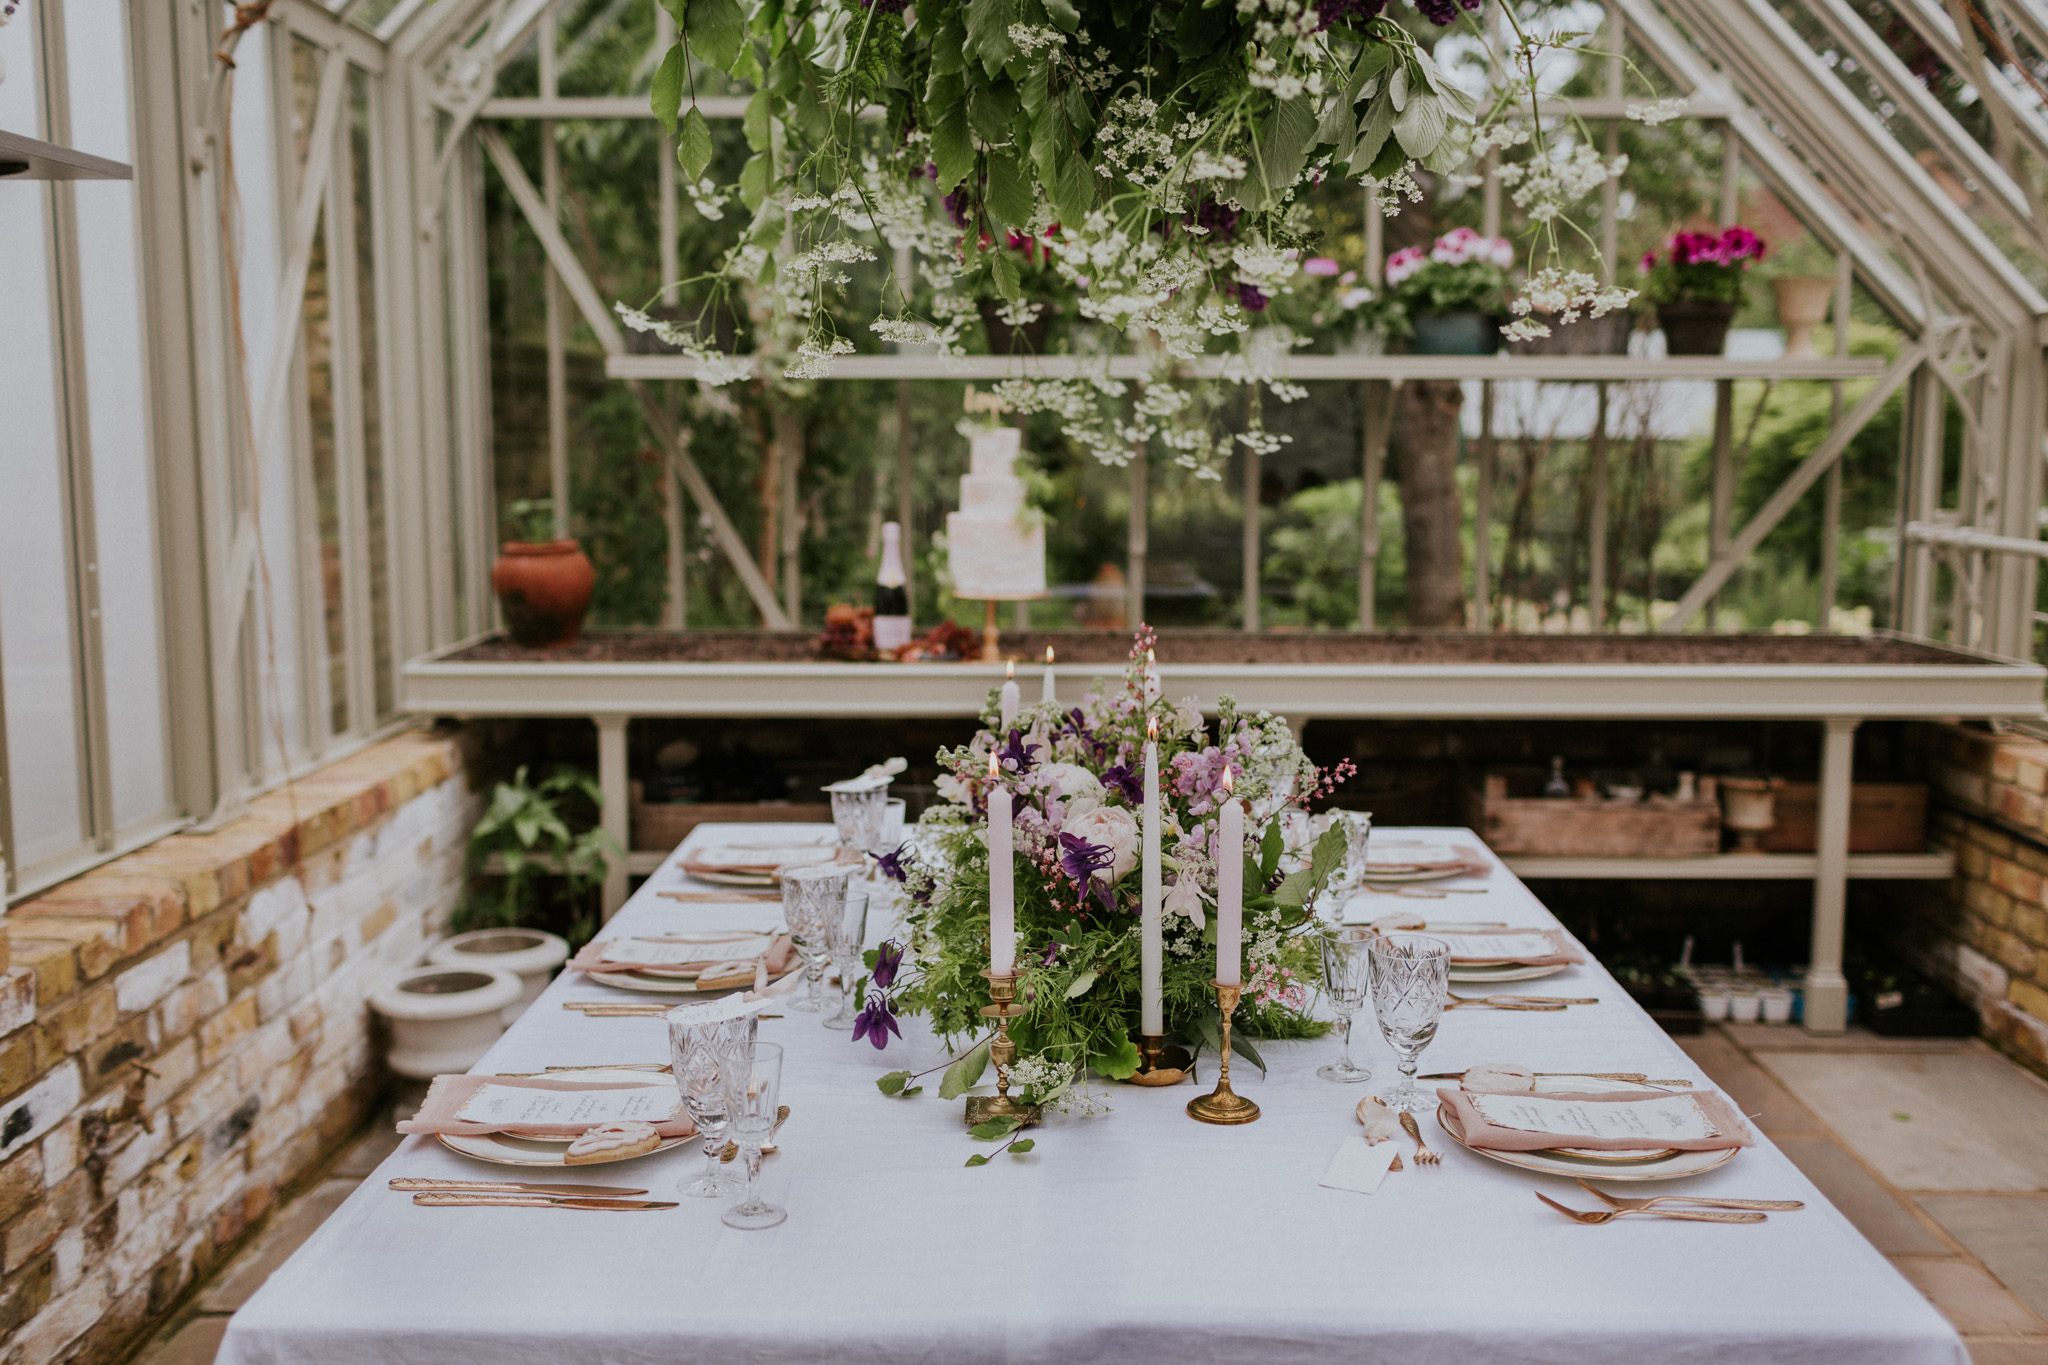 English garden table setting and romantic buttercream wedding cake. Photo by Maja Tsolo